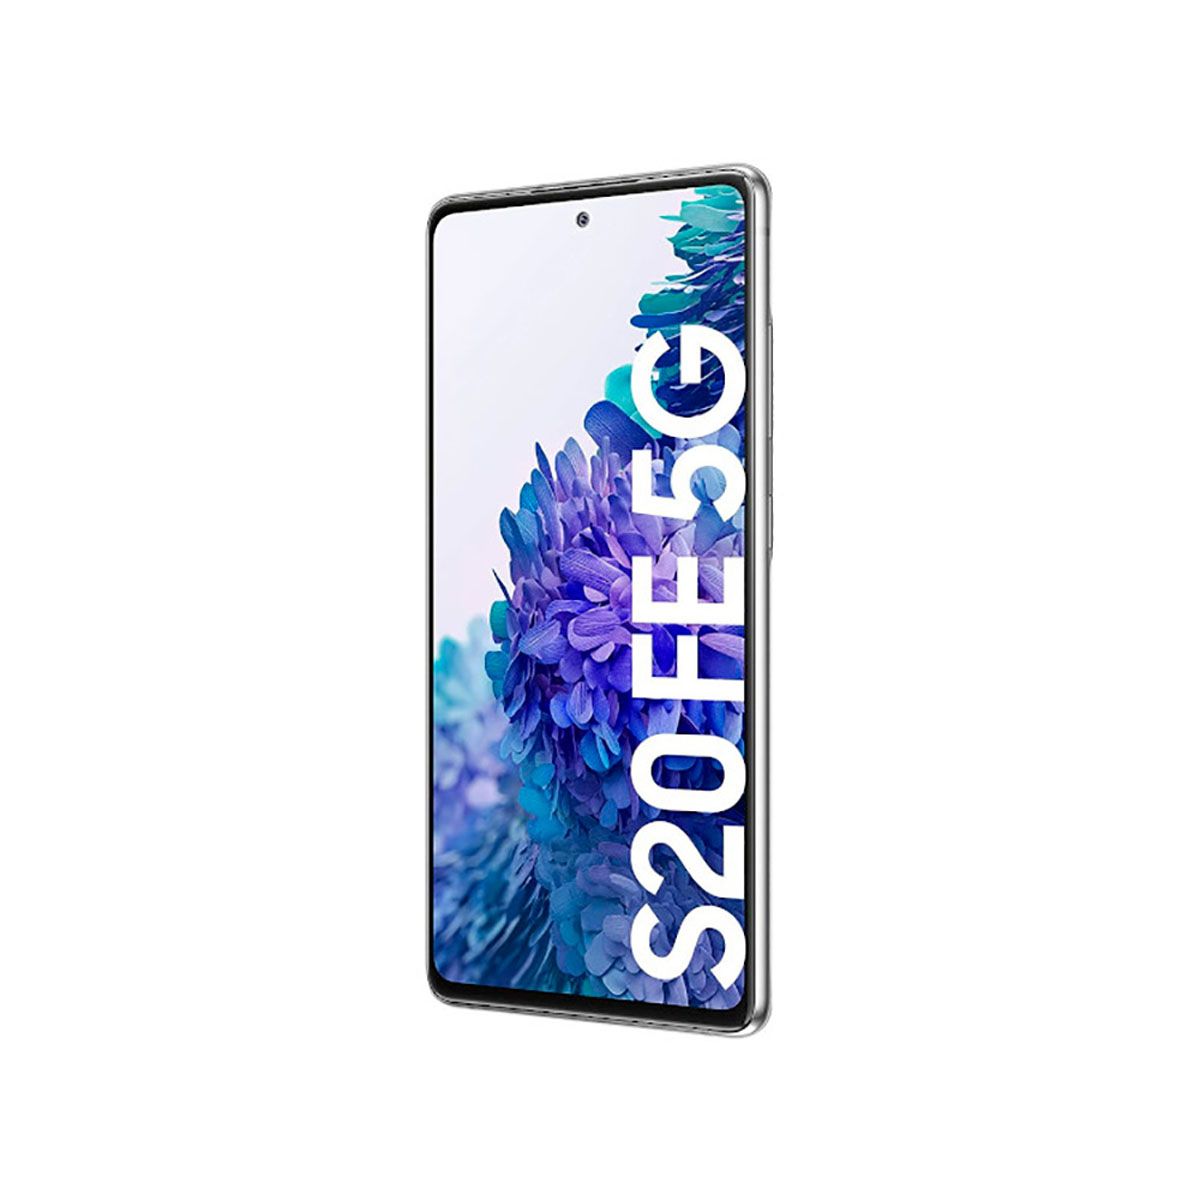 Samsung Galaxy S20 FE 5G 6GB/128GB Blanco (Cloud White) Dual SIM G781